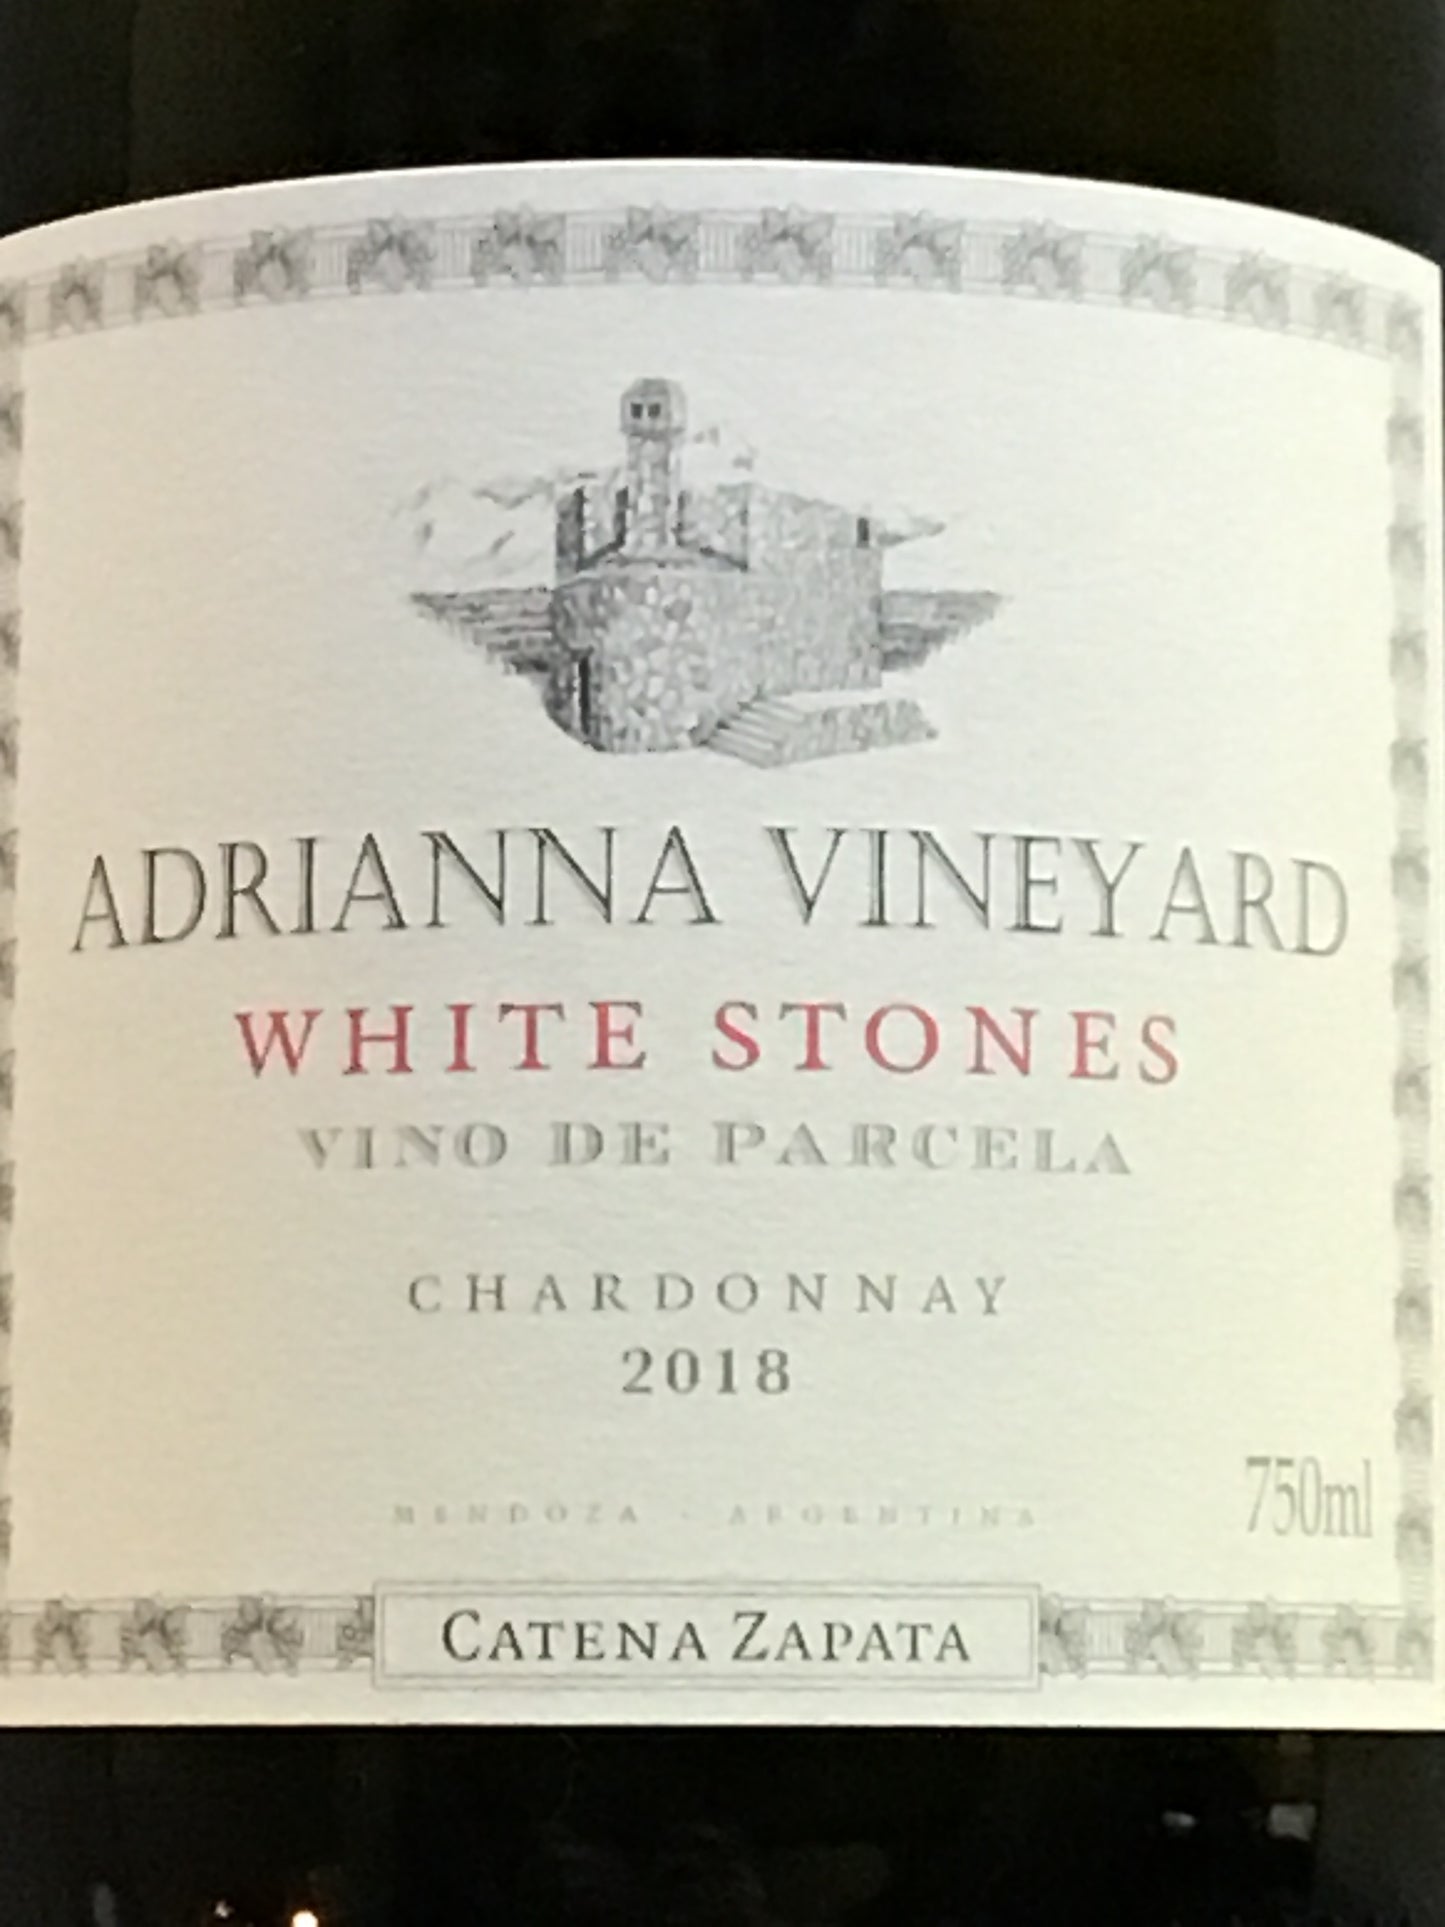 Catena Zapata 'Adrianna Vineyard, White Stones' - Chardonnay - Mendoza